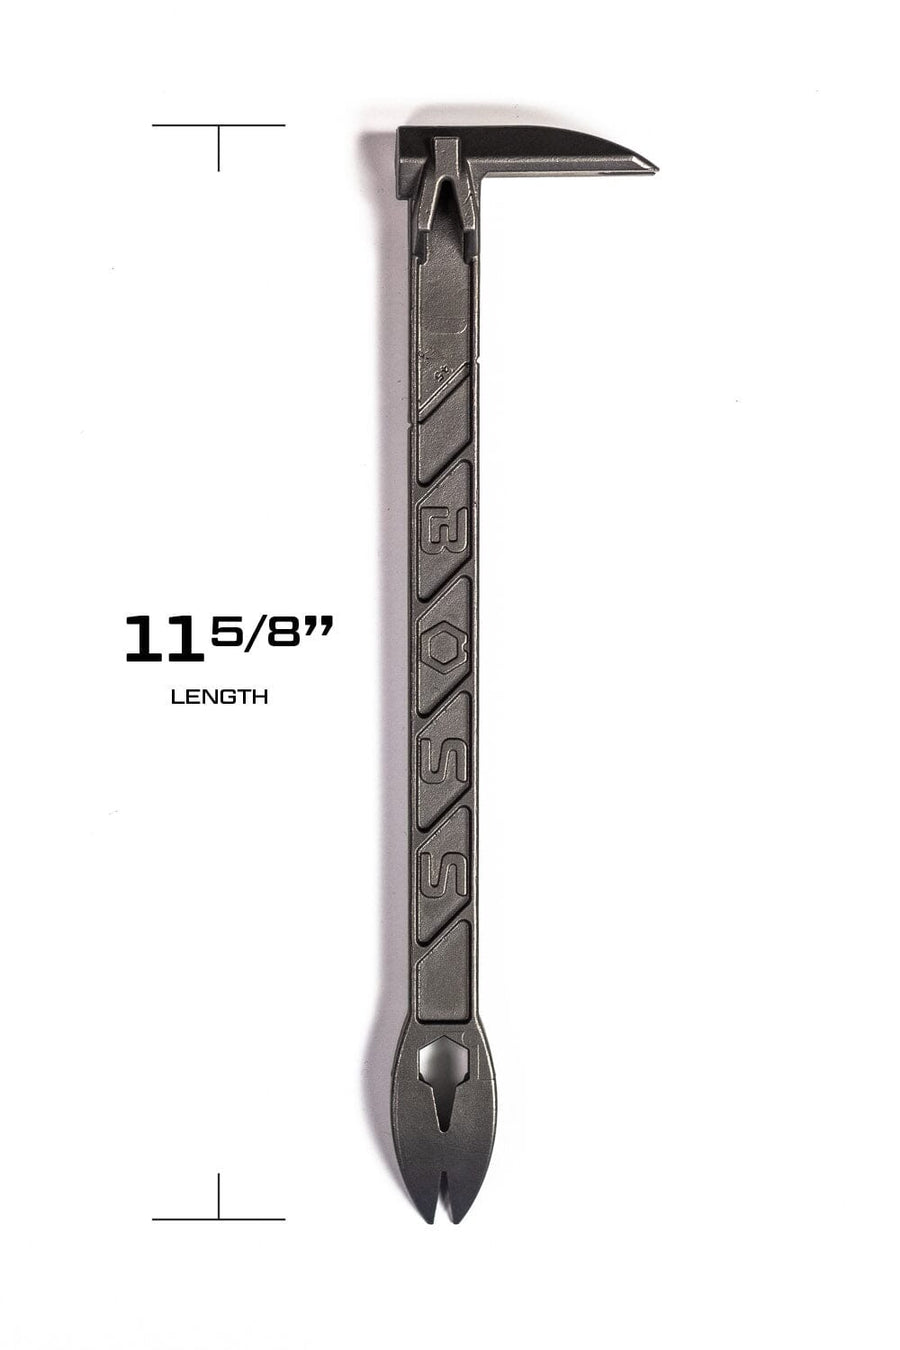 11" Boss Paw | Steel Hand Tools Boss Hammer Co. 